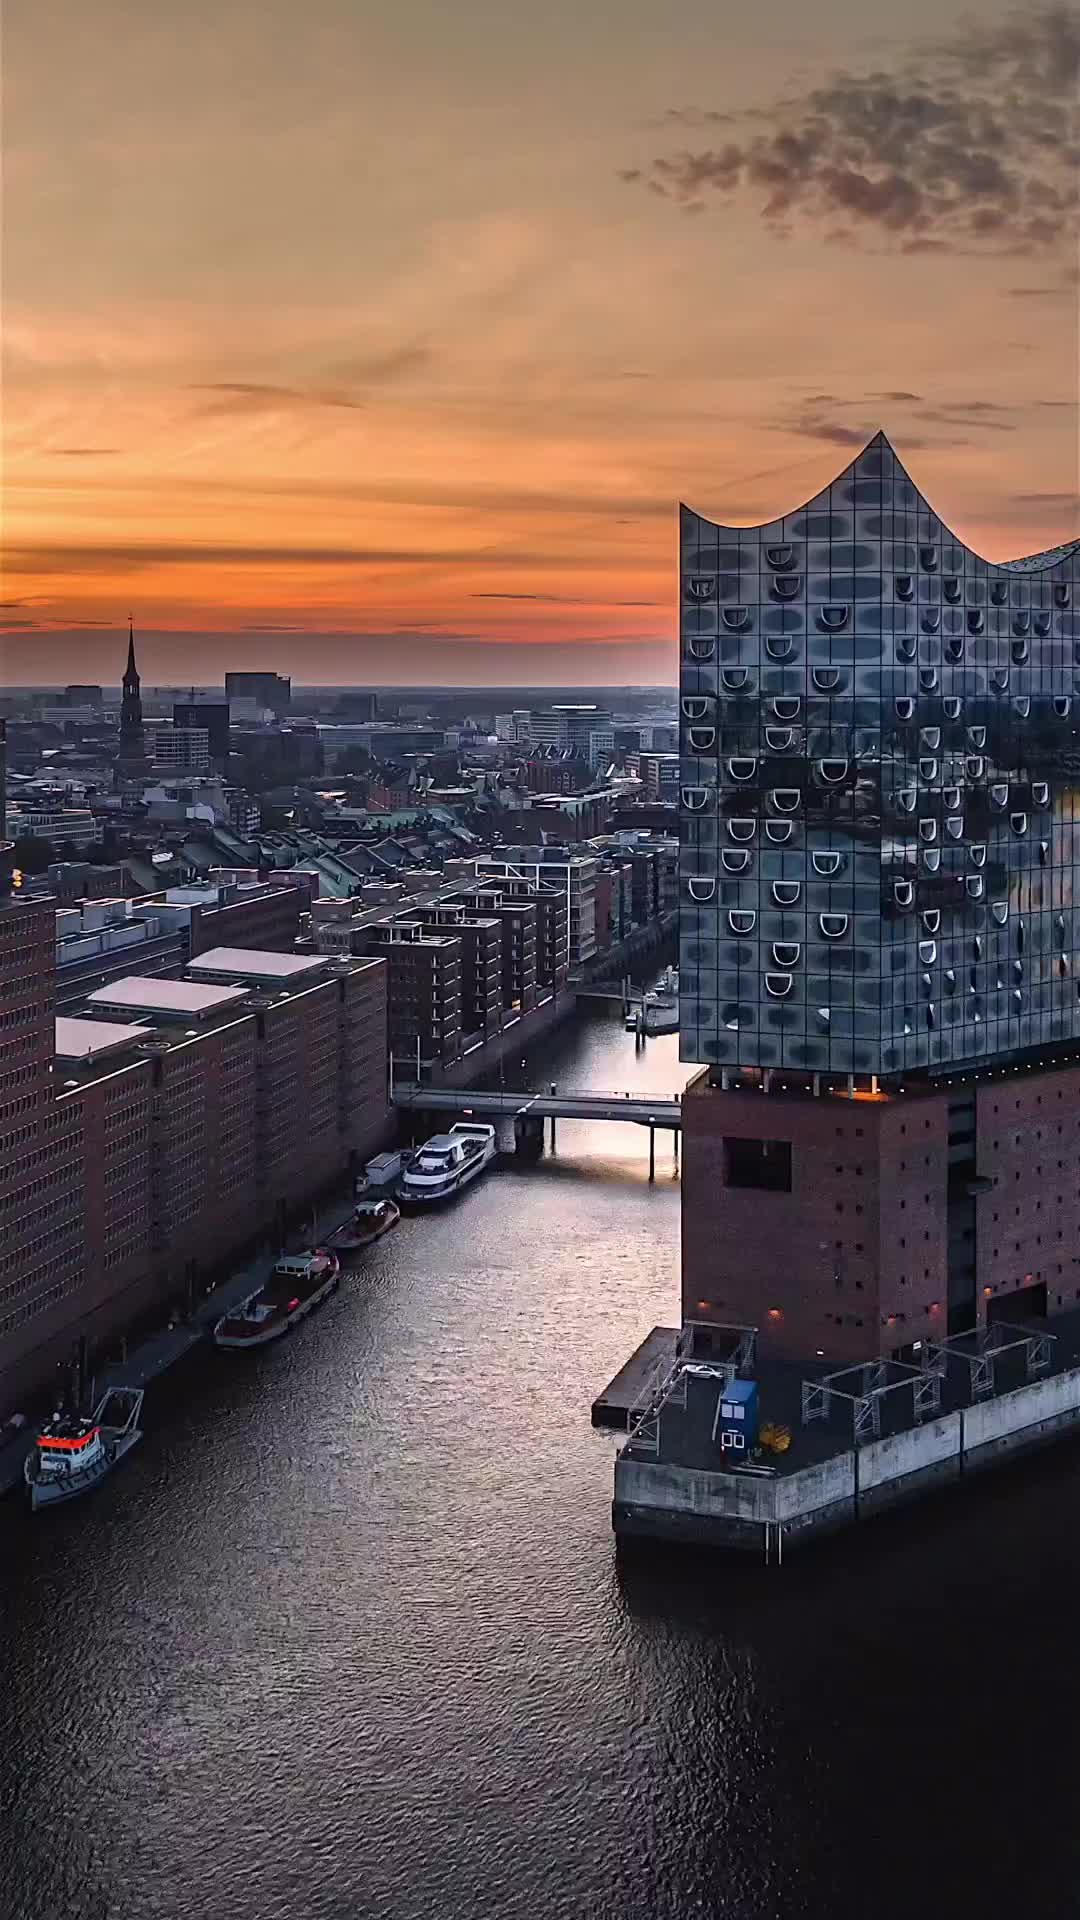 Good Morning Hamburg at Elbphilharmonie 🌅🇩🇪